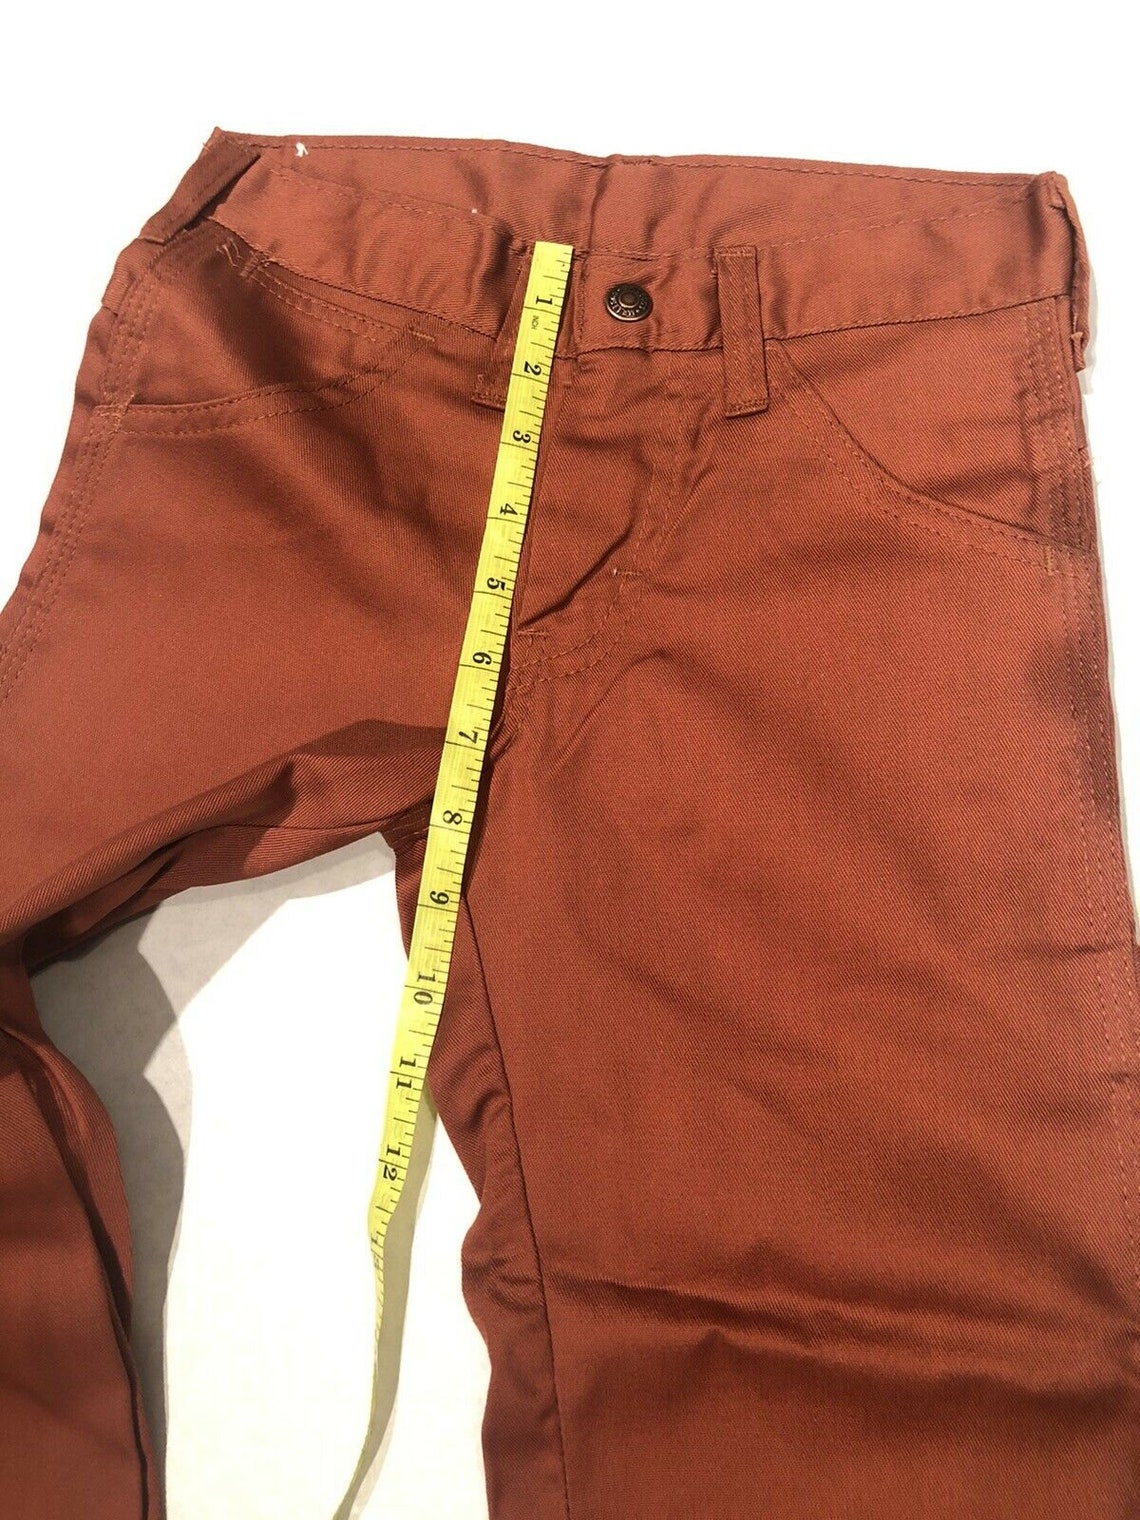 Mr. Leggs Children's Burgundy Red Jeans Pants Size 12 W23 | Etsy